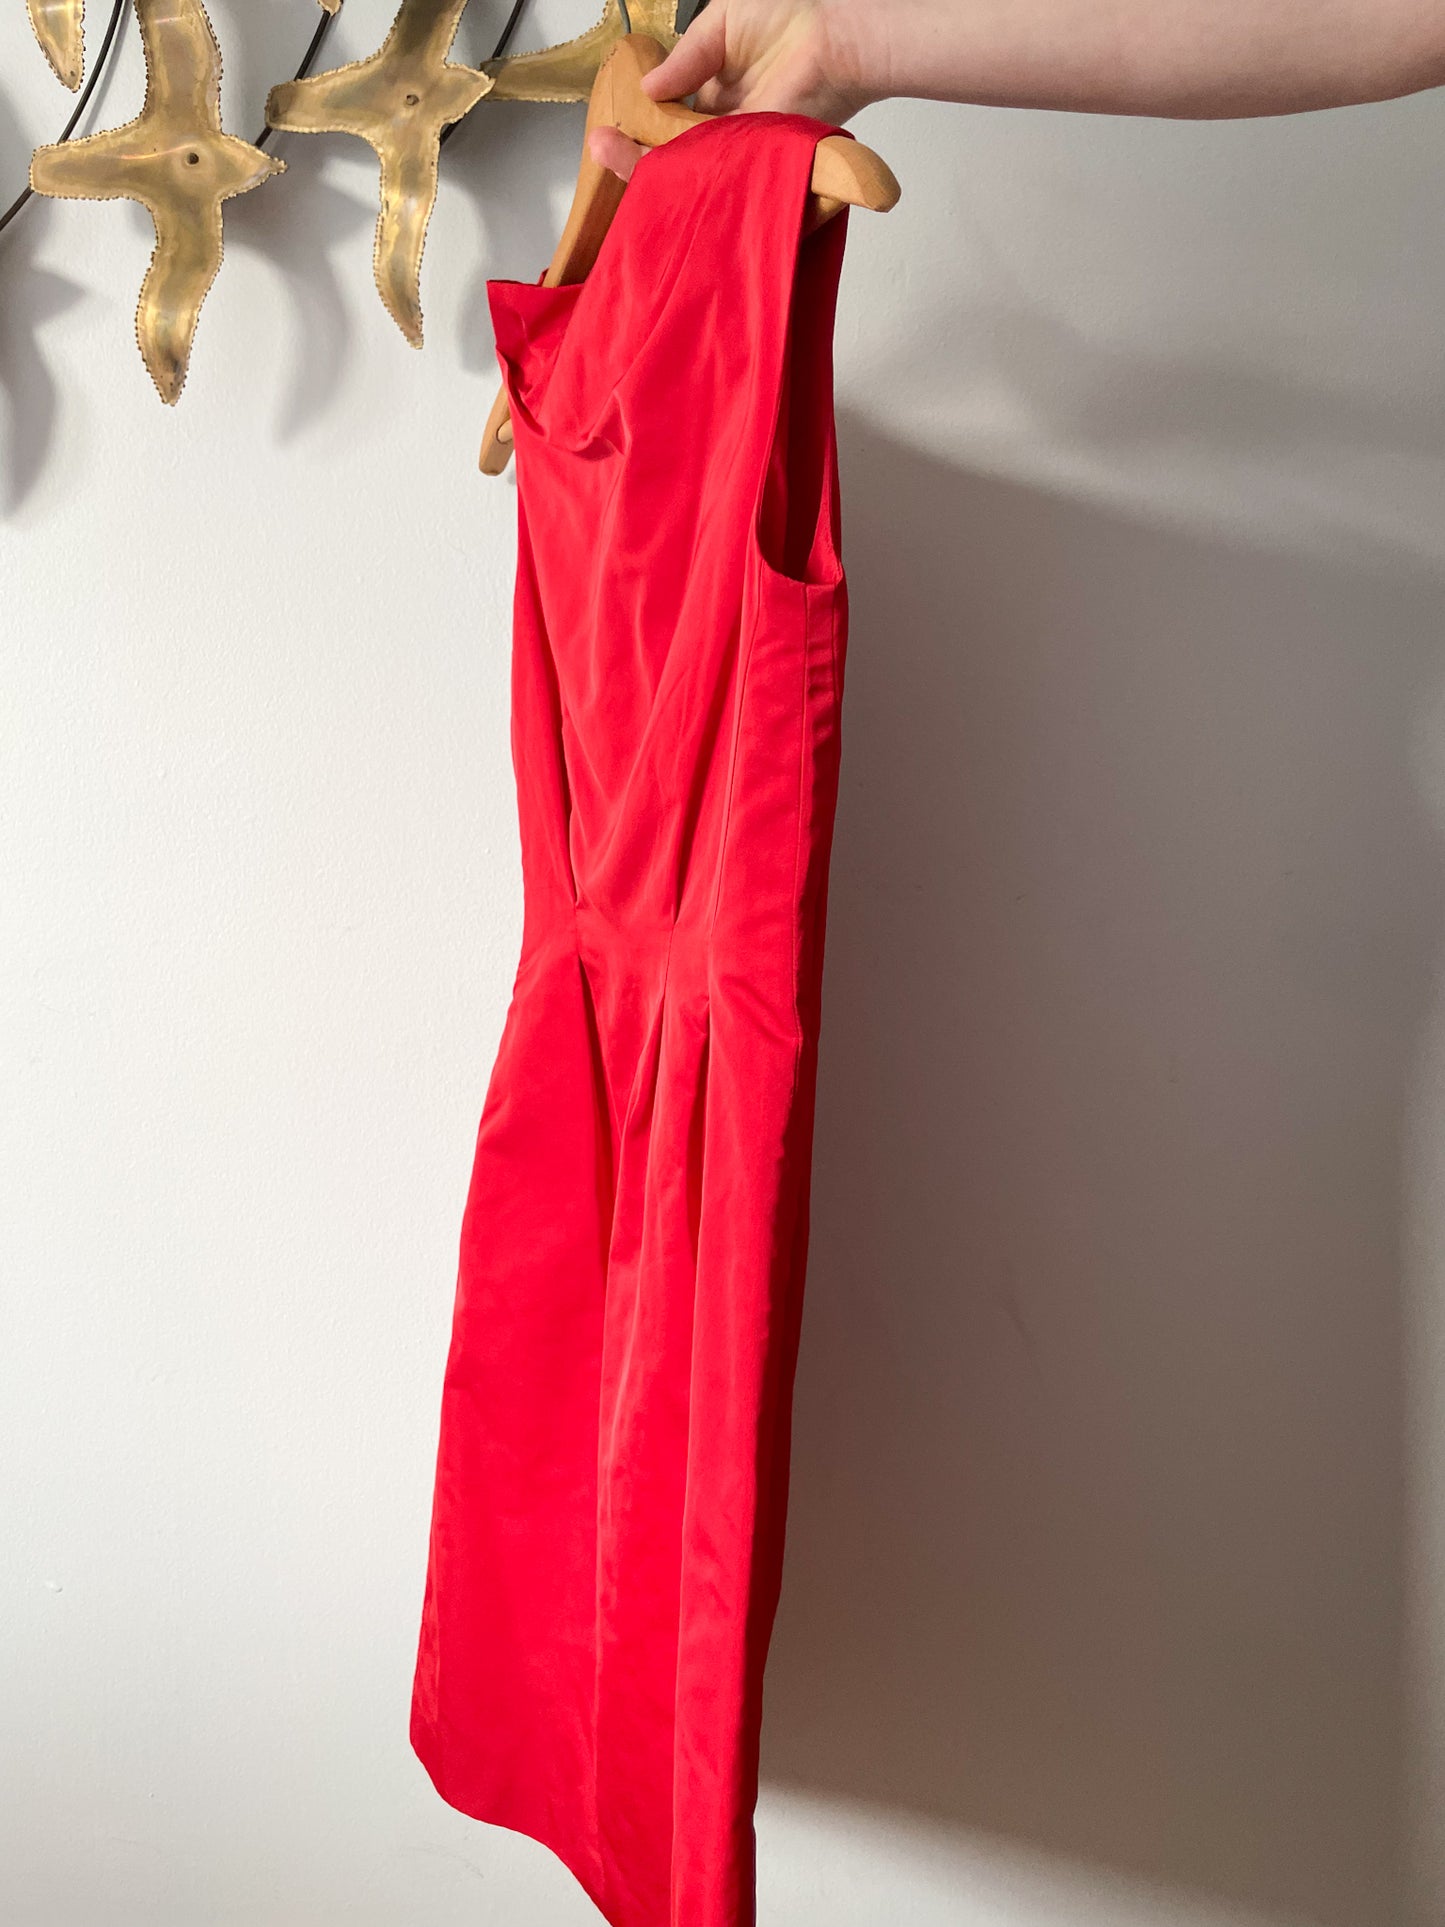 Lida Baday Red Gathered Sheath Dress - Size 2